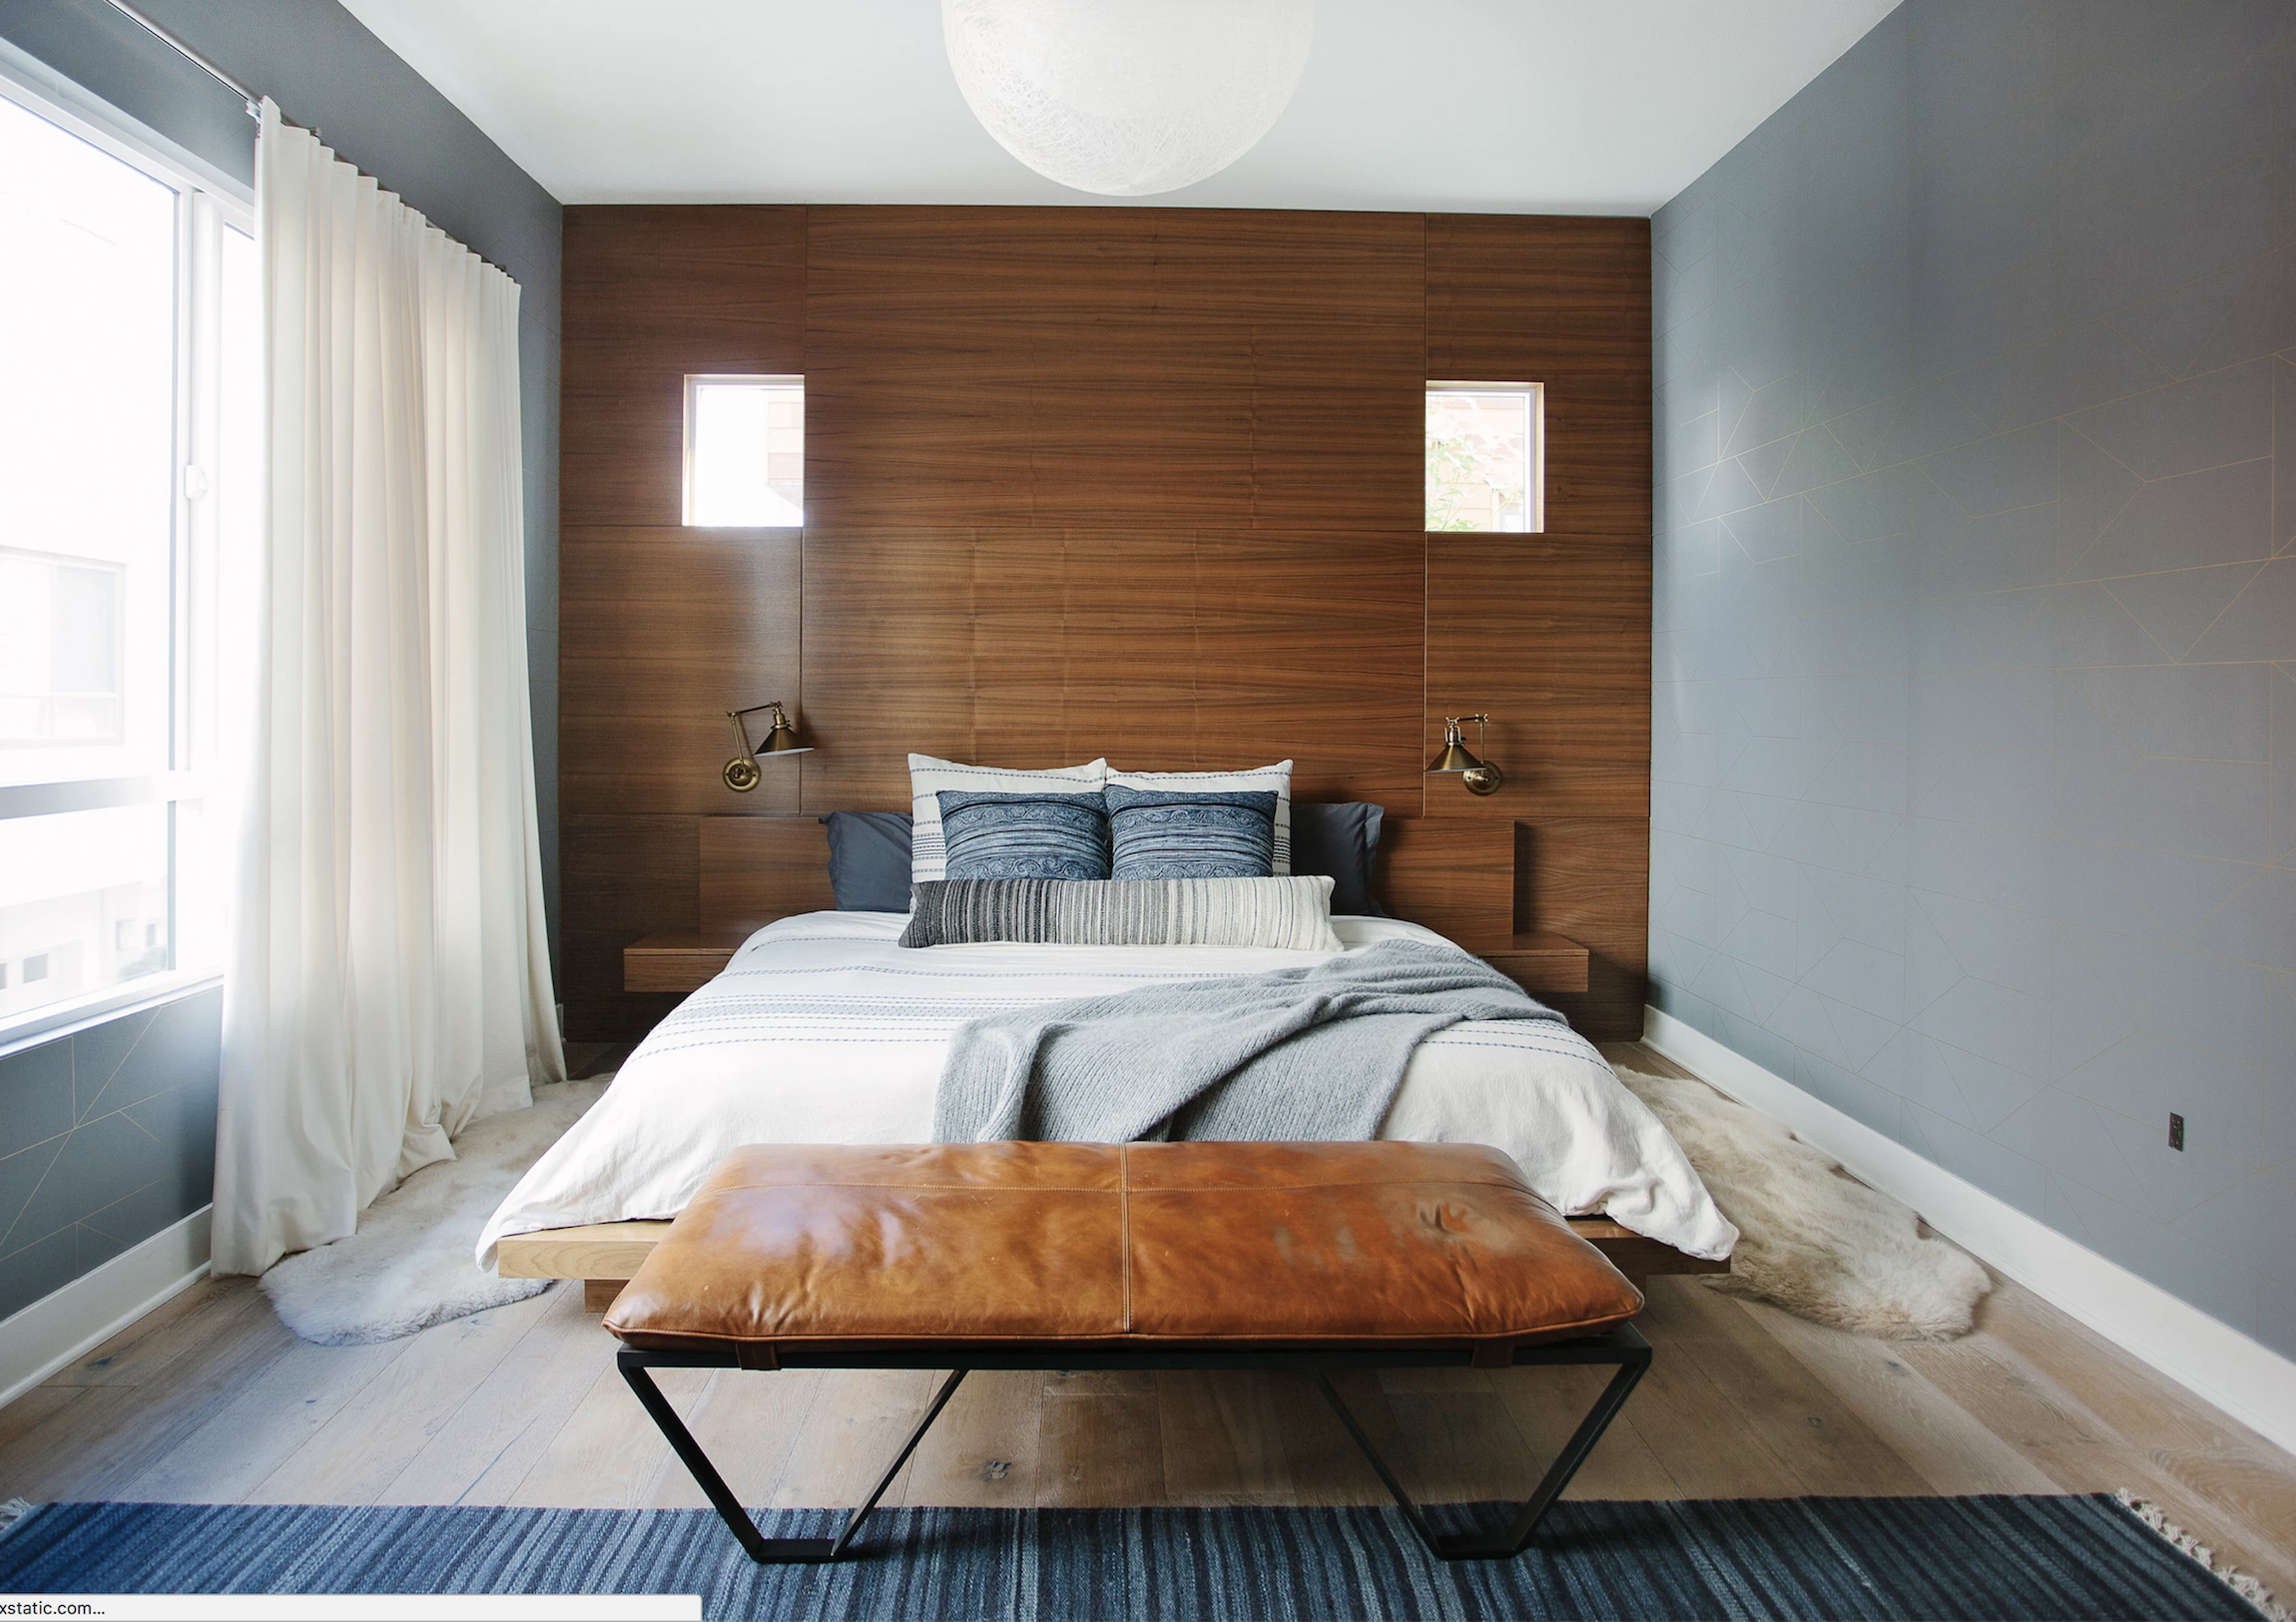 25 Best Gray Bedroom Ideas Decorating Pictures Of Gray Bedroom Design in proportions 2300 X 1625